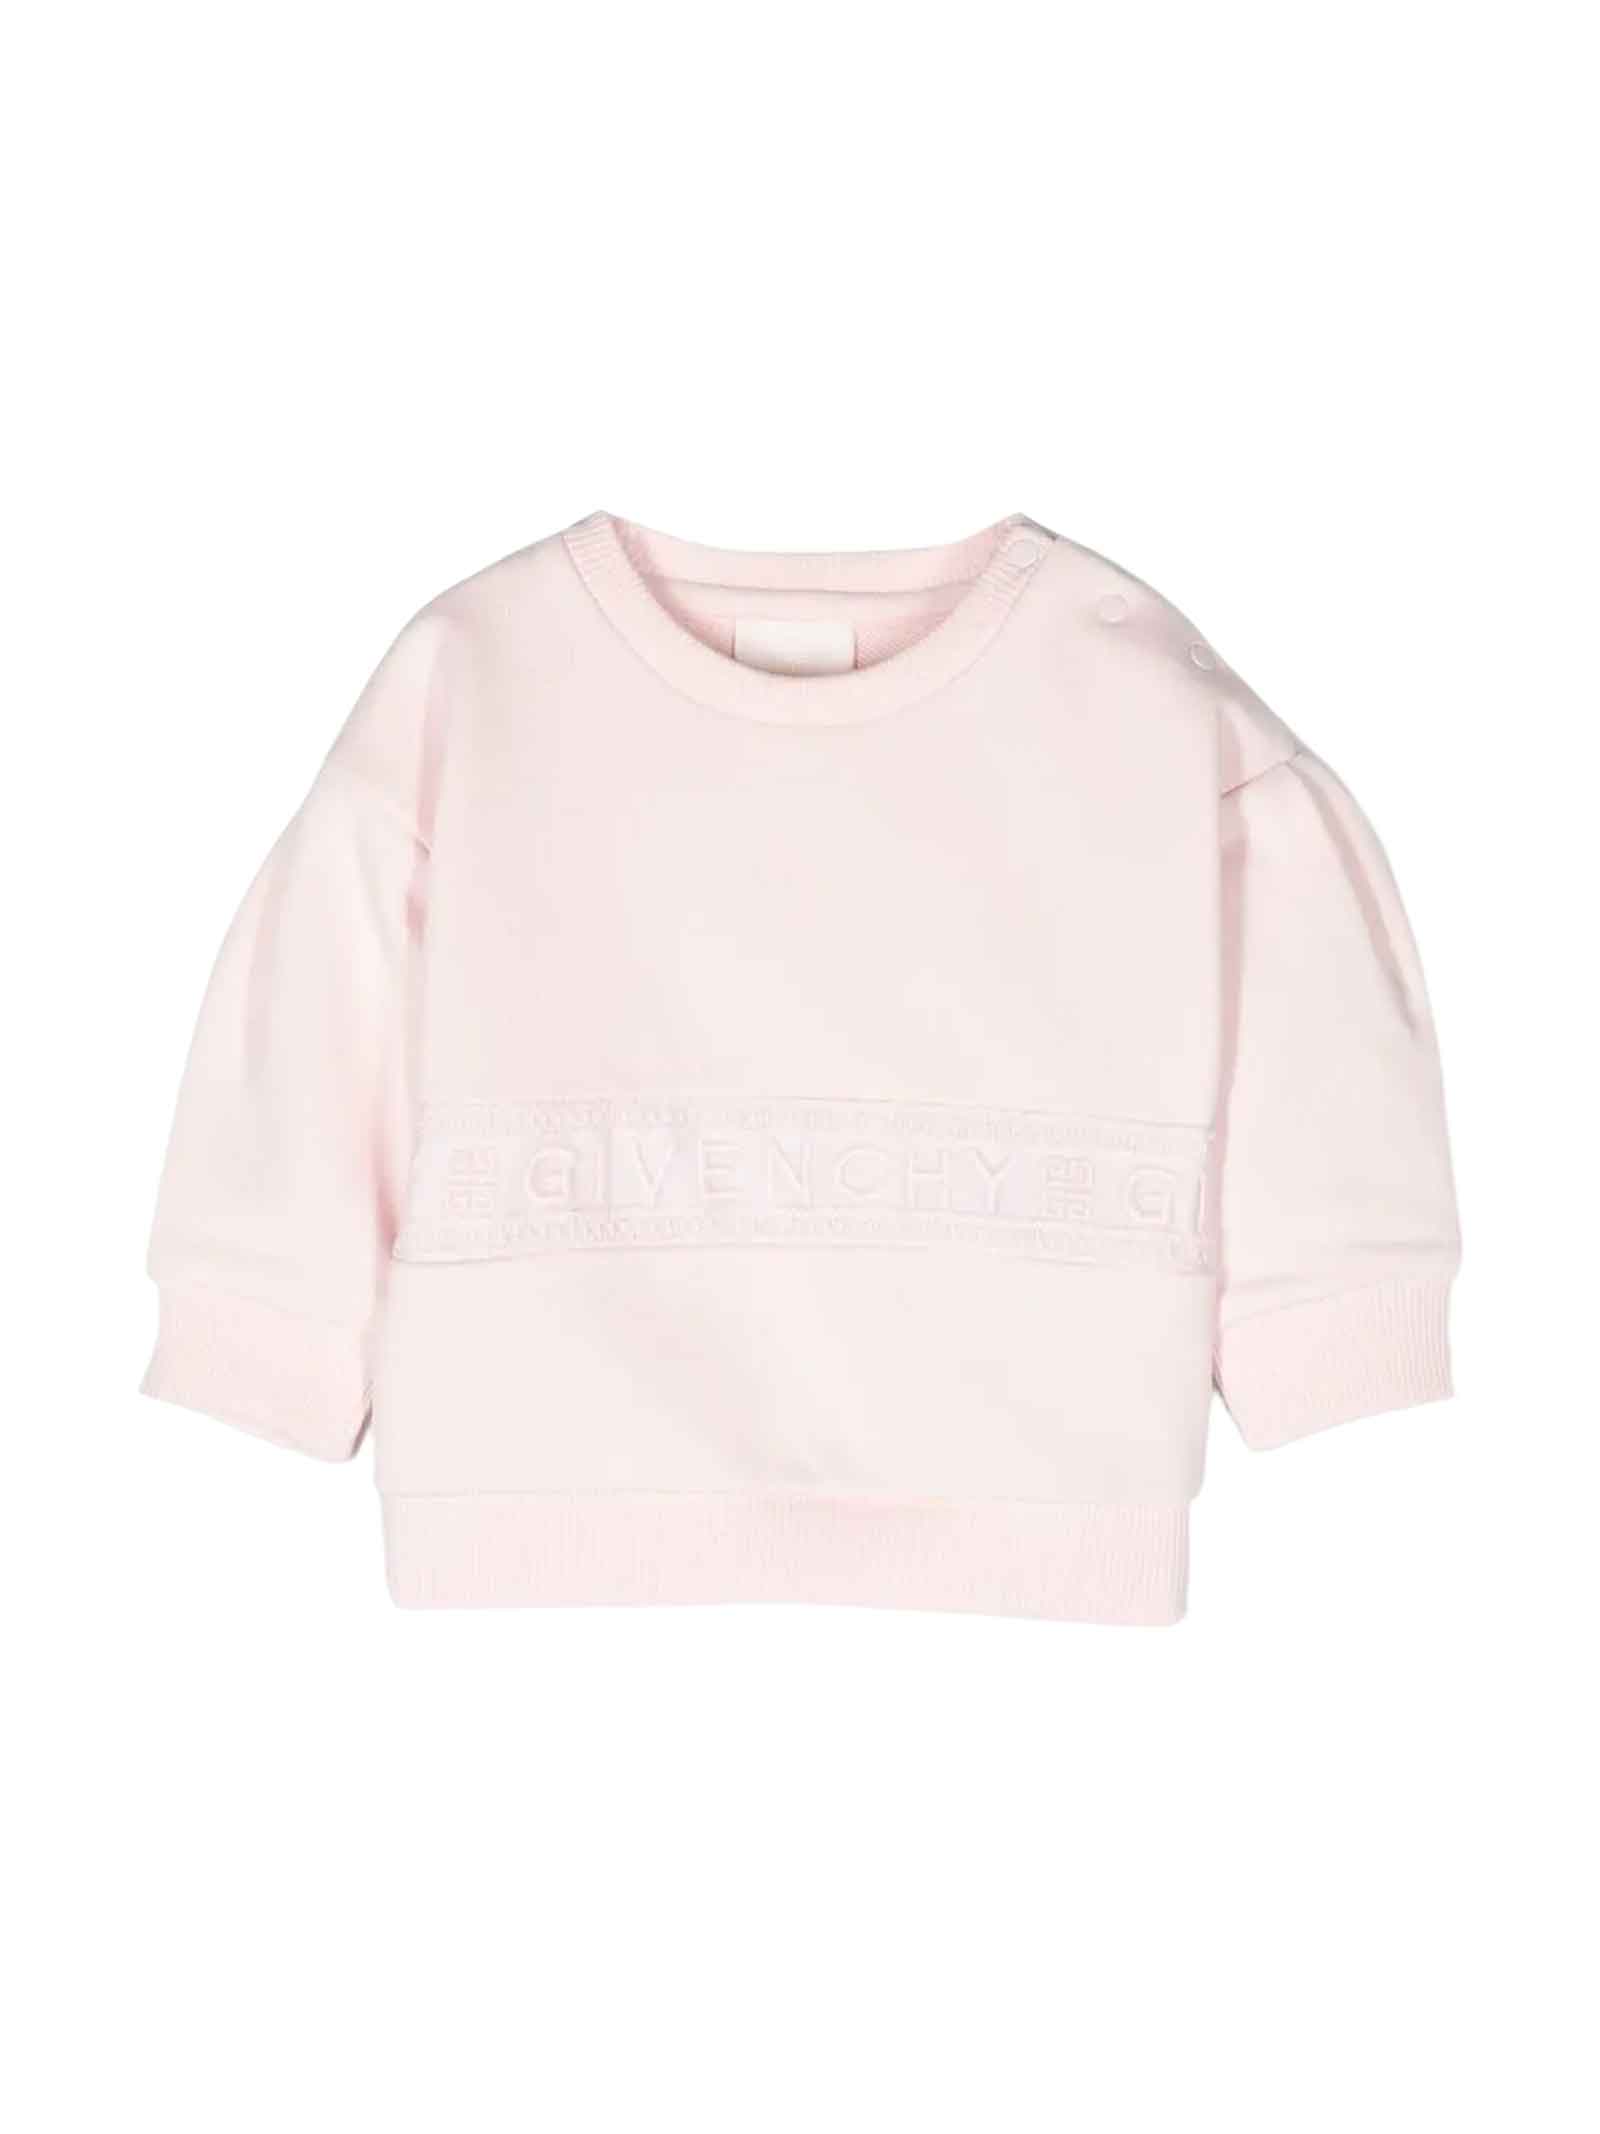 Givenchy Pink Sweatshirt Baby Girl